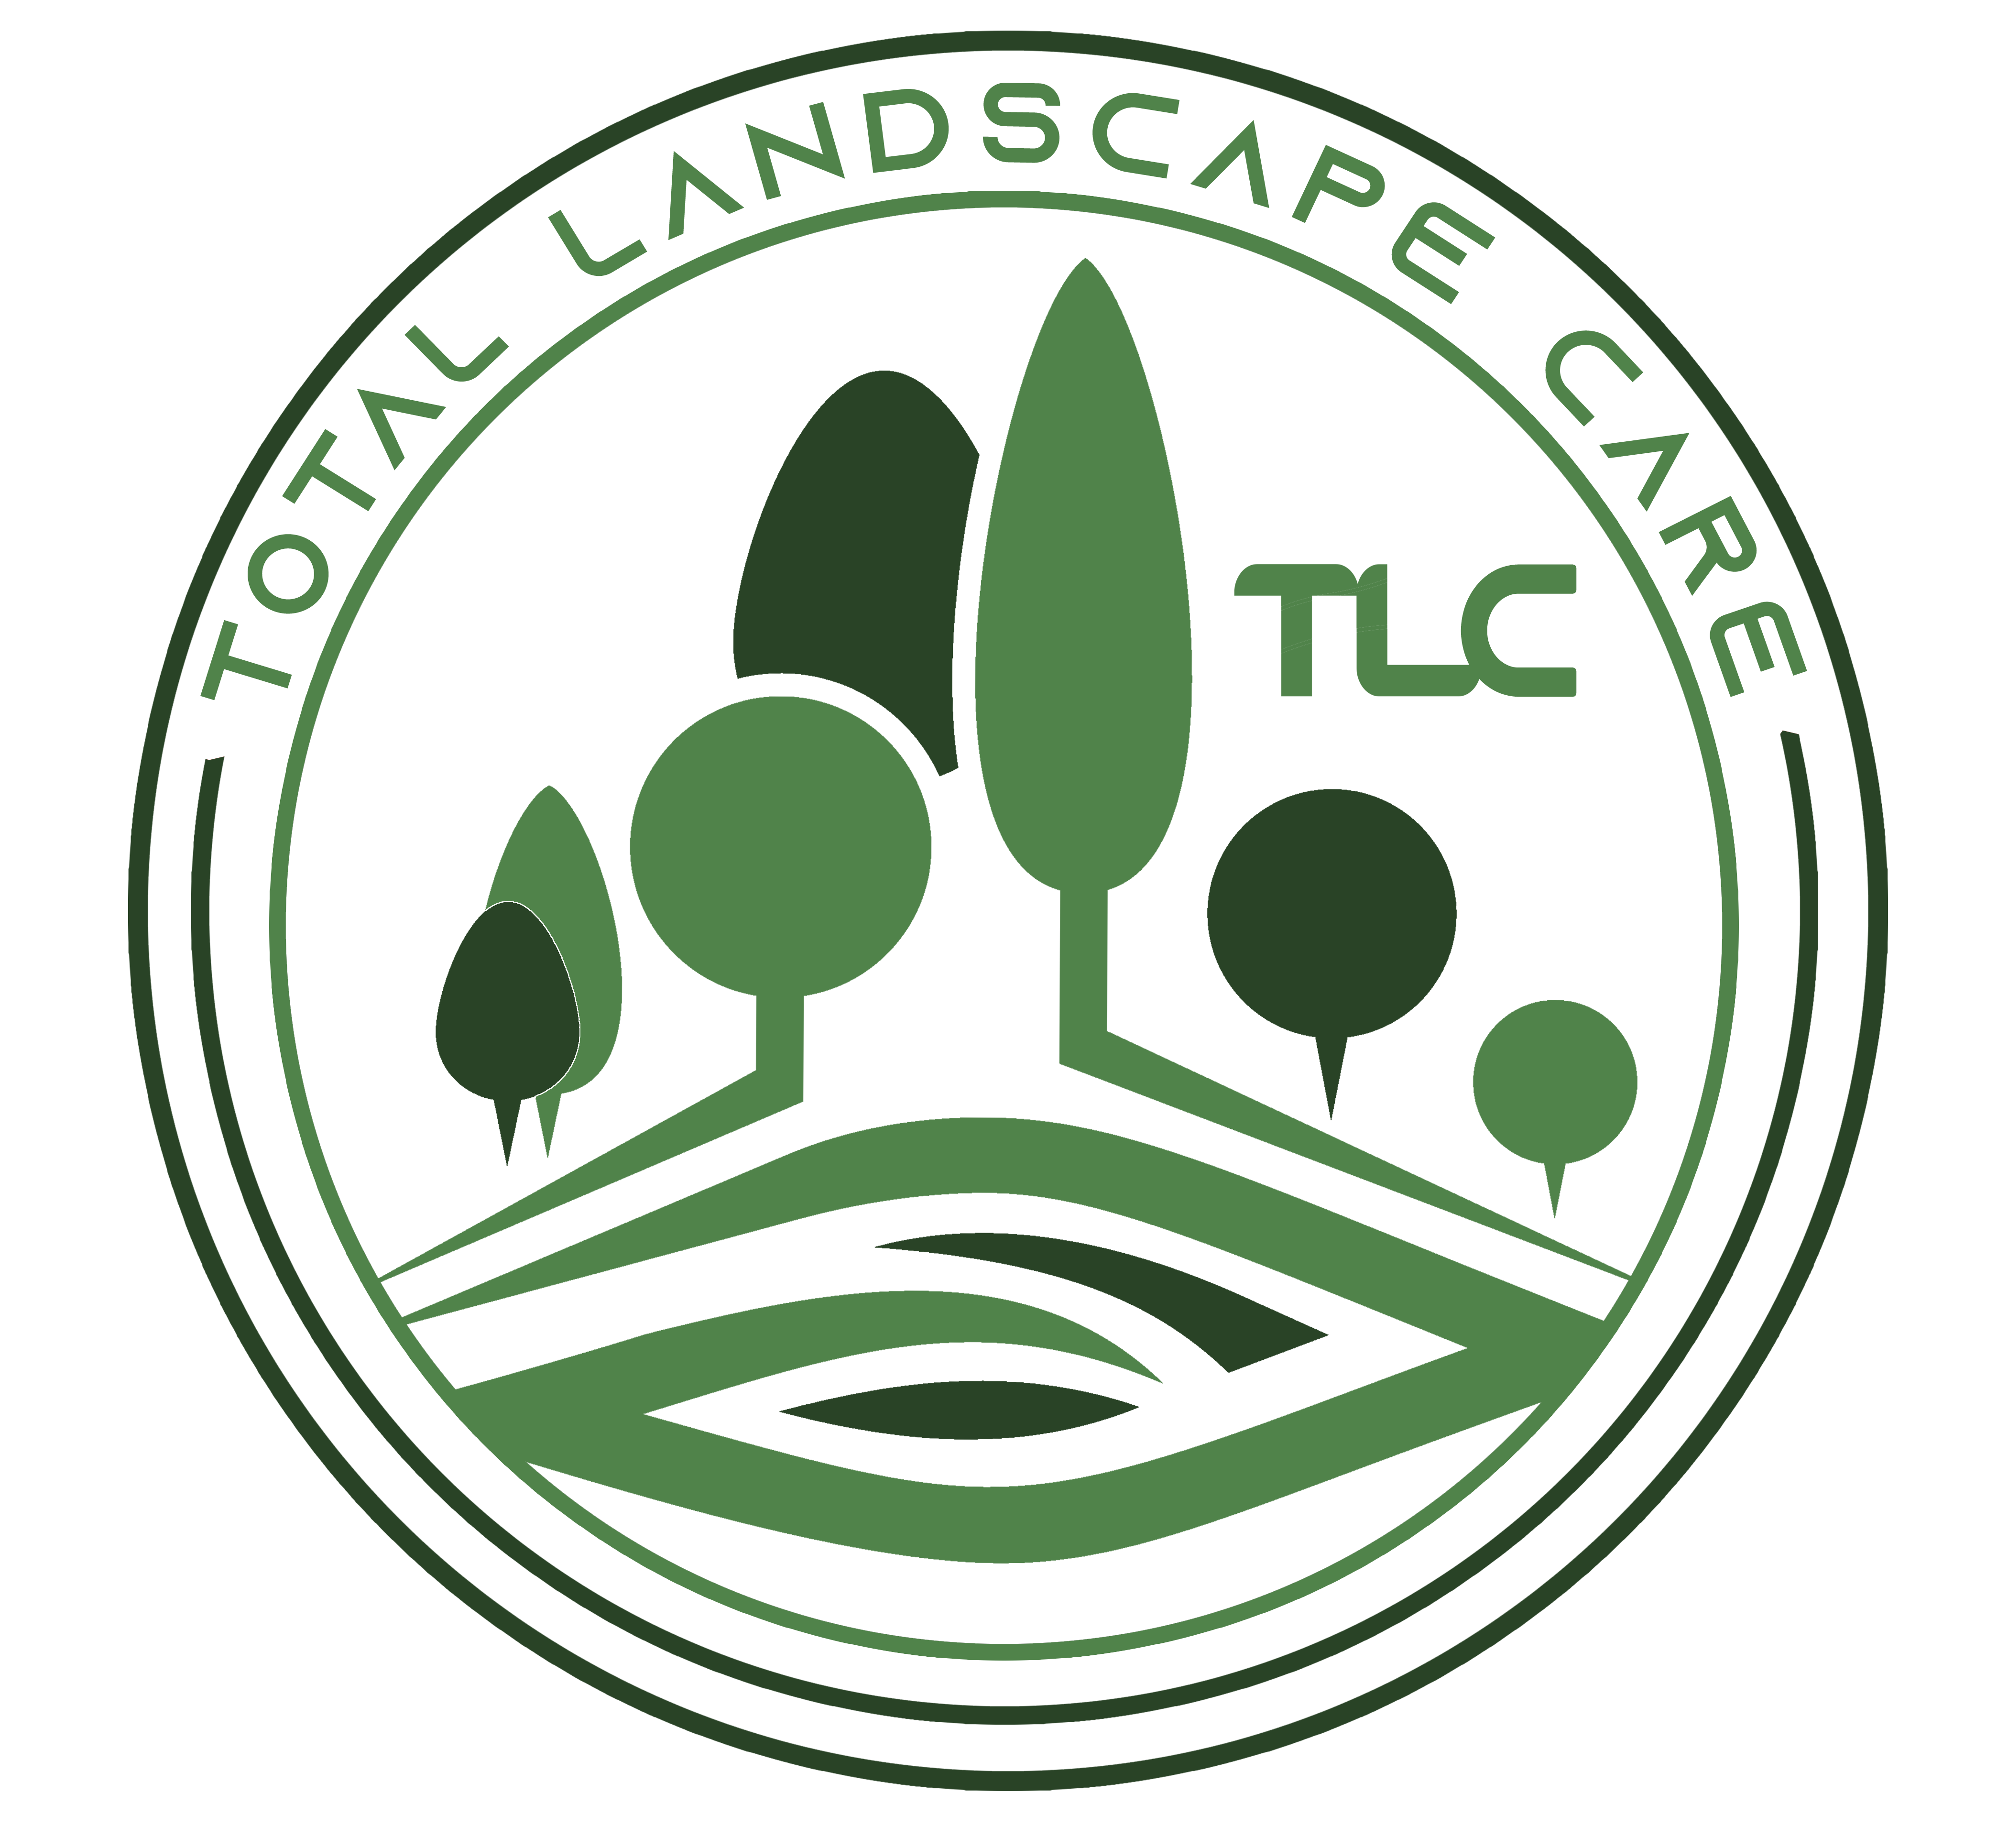 Total Landscape Care